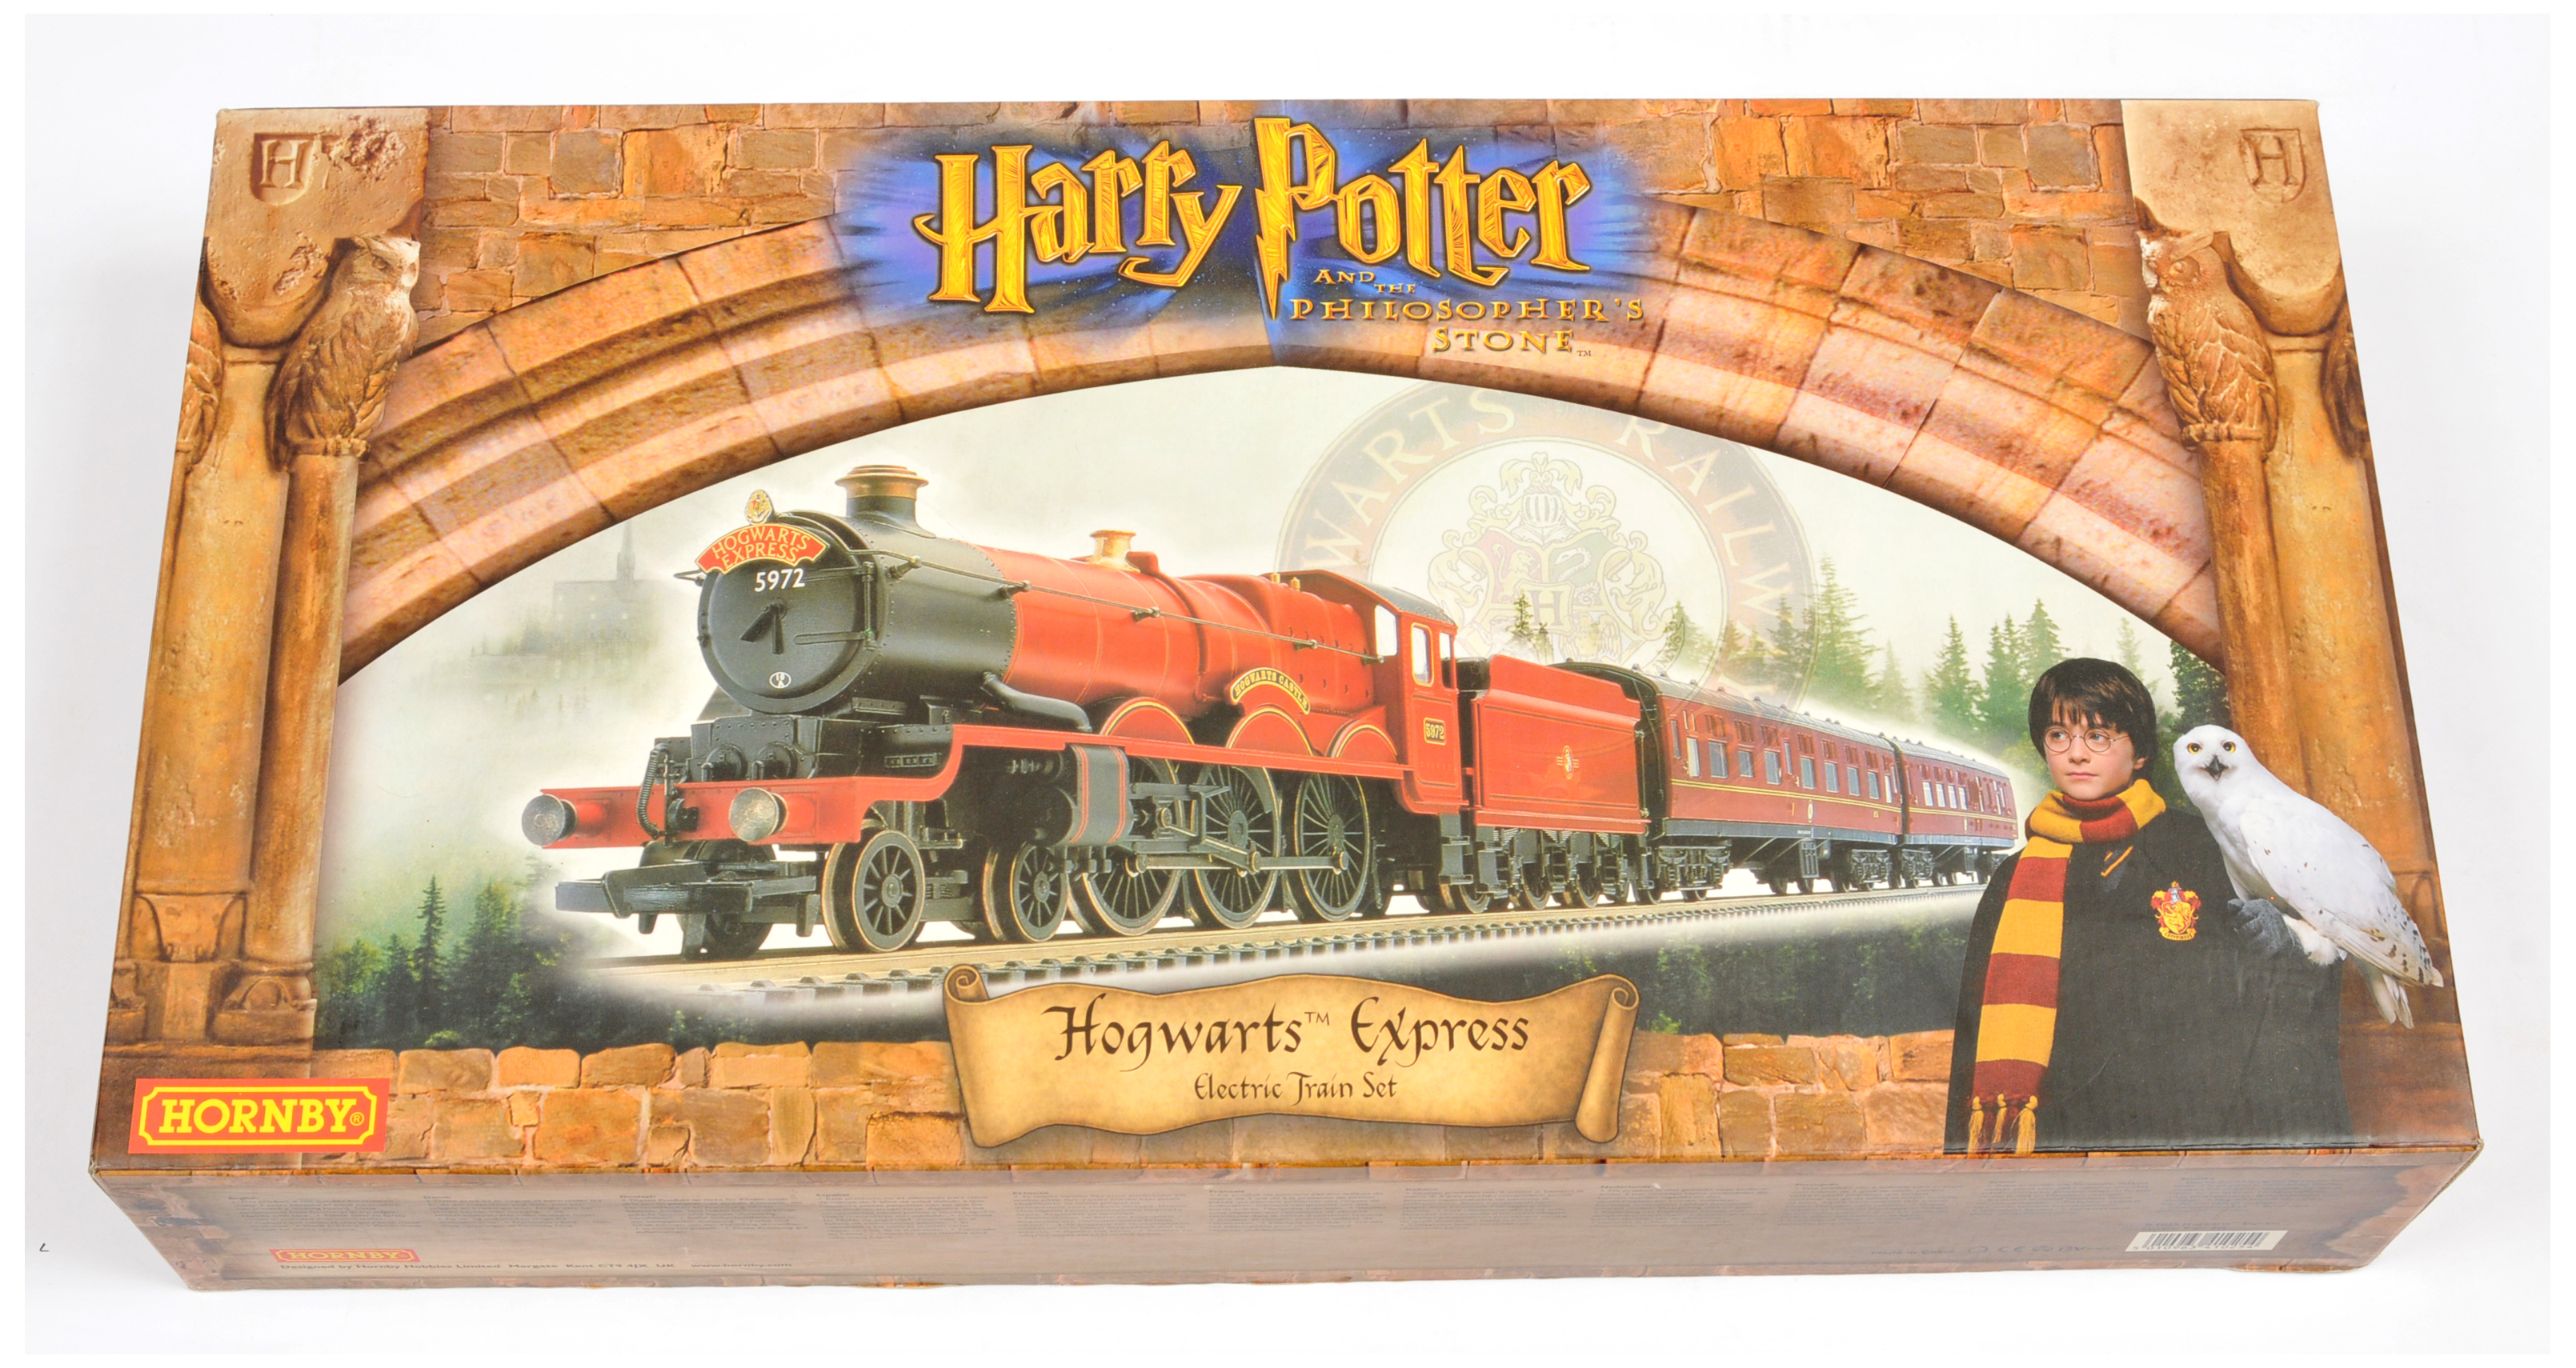 Hornby (China) R1025 "Hogwarts" (Harry Potter & the Philosophers Stone) Train Set 